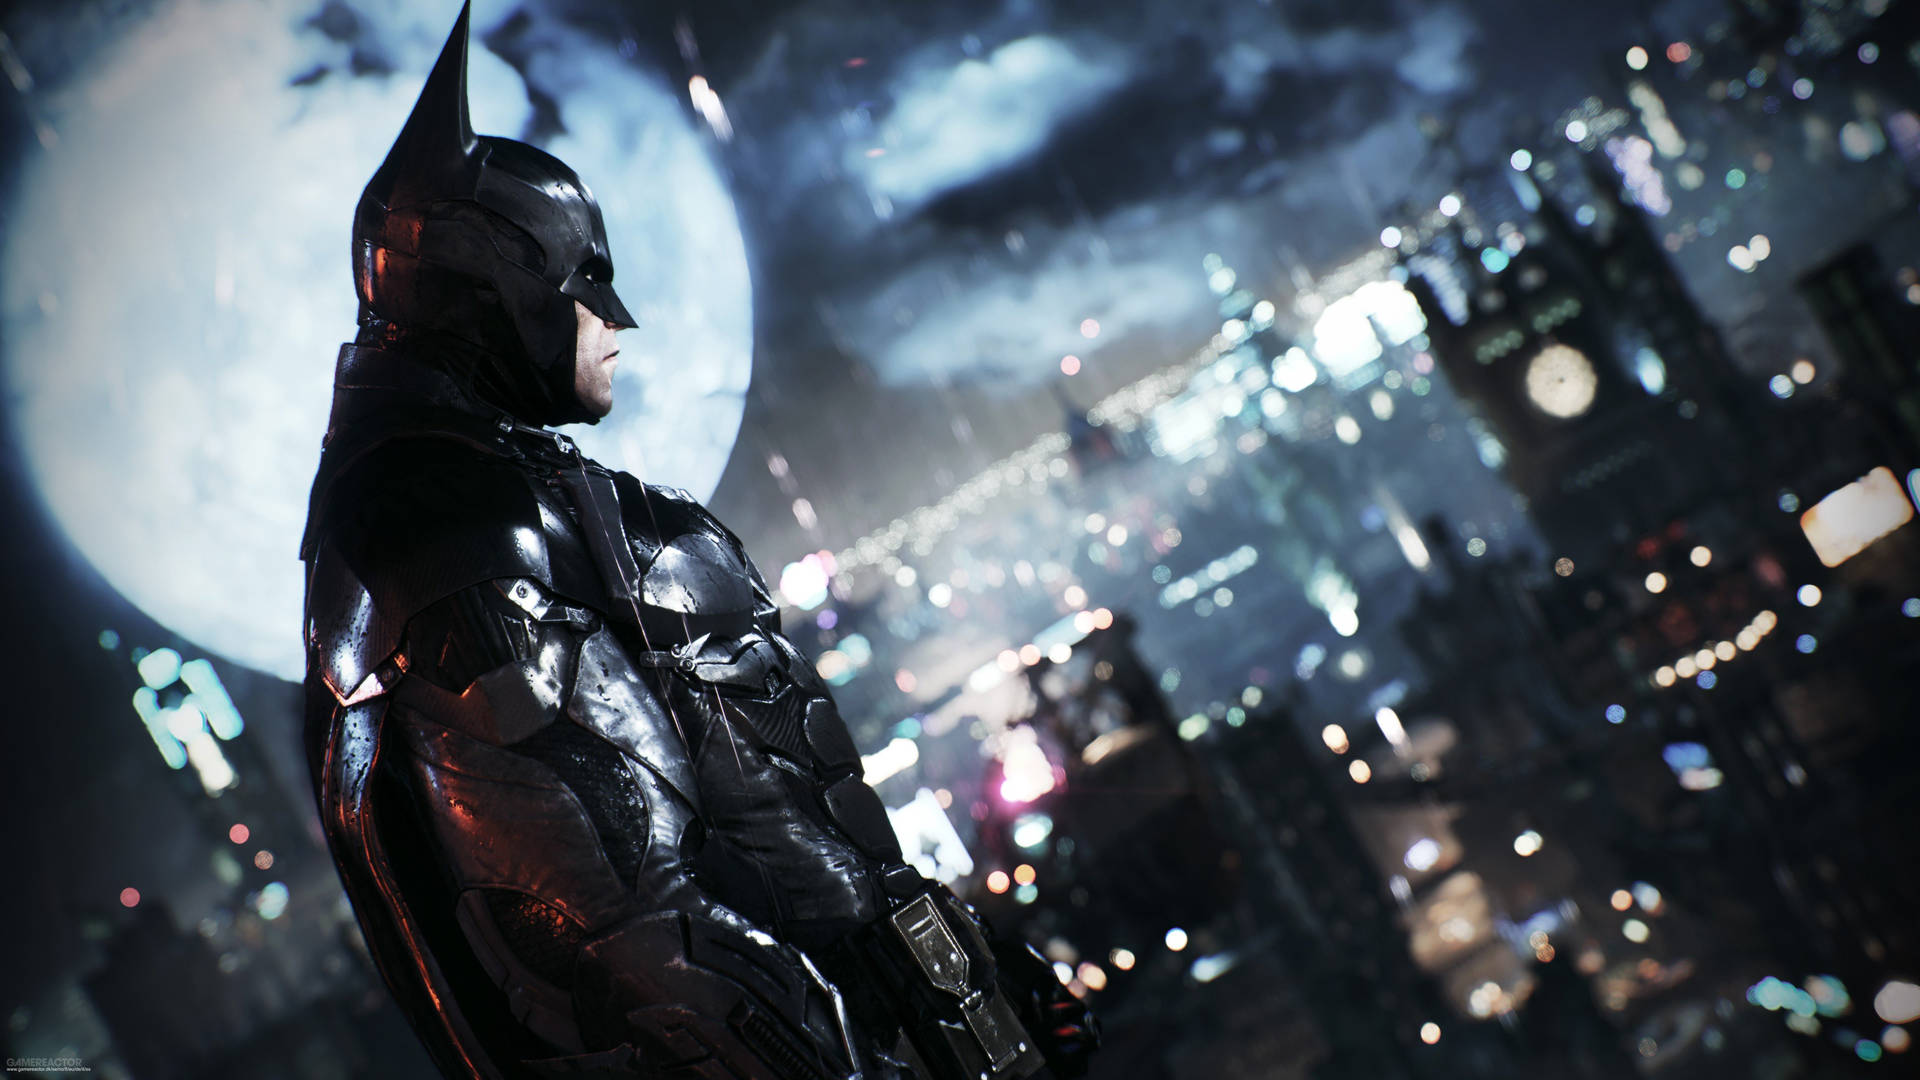 The Dark Knight Over Gotham City